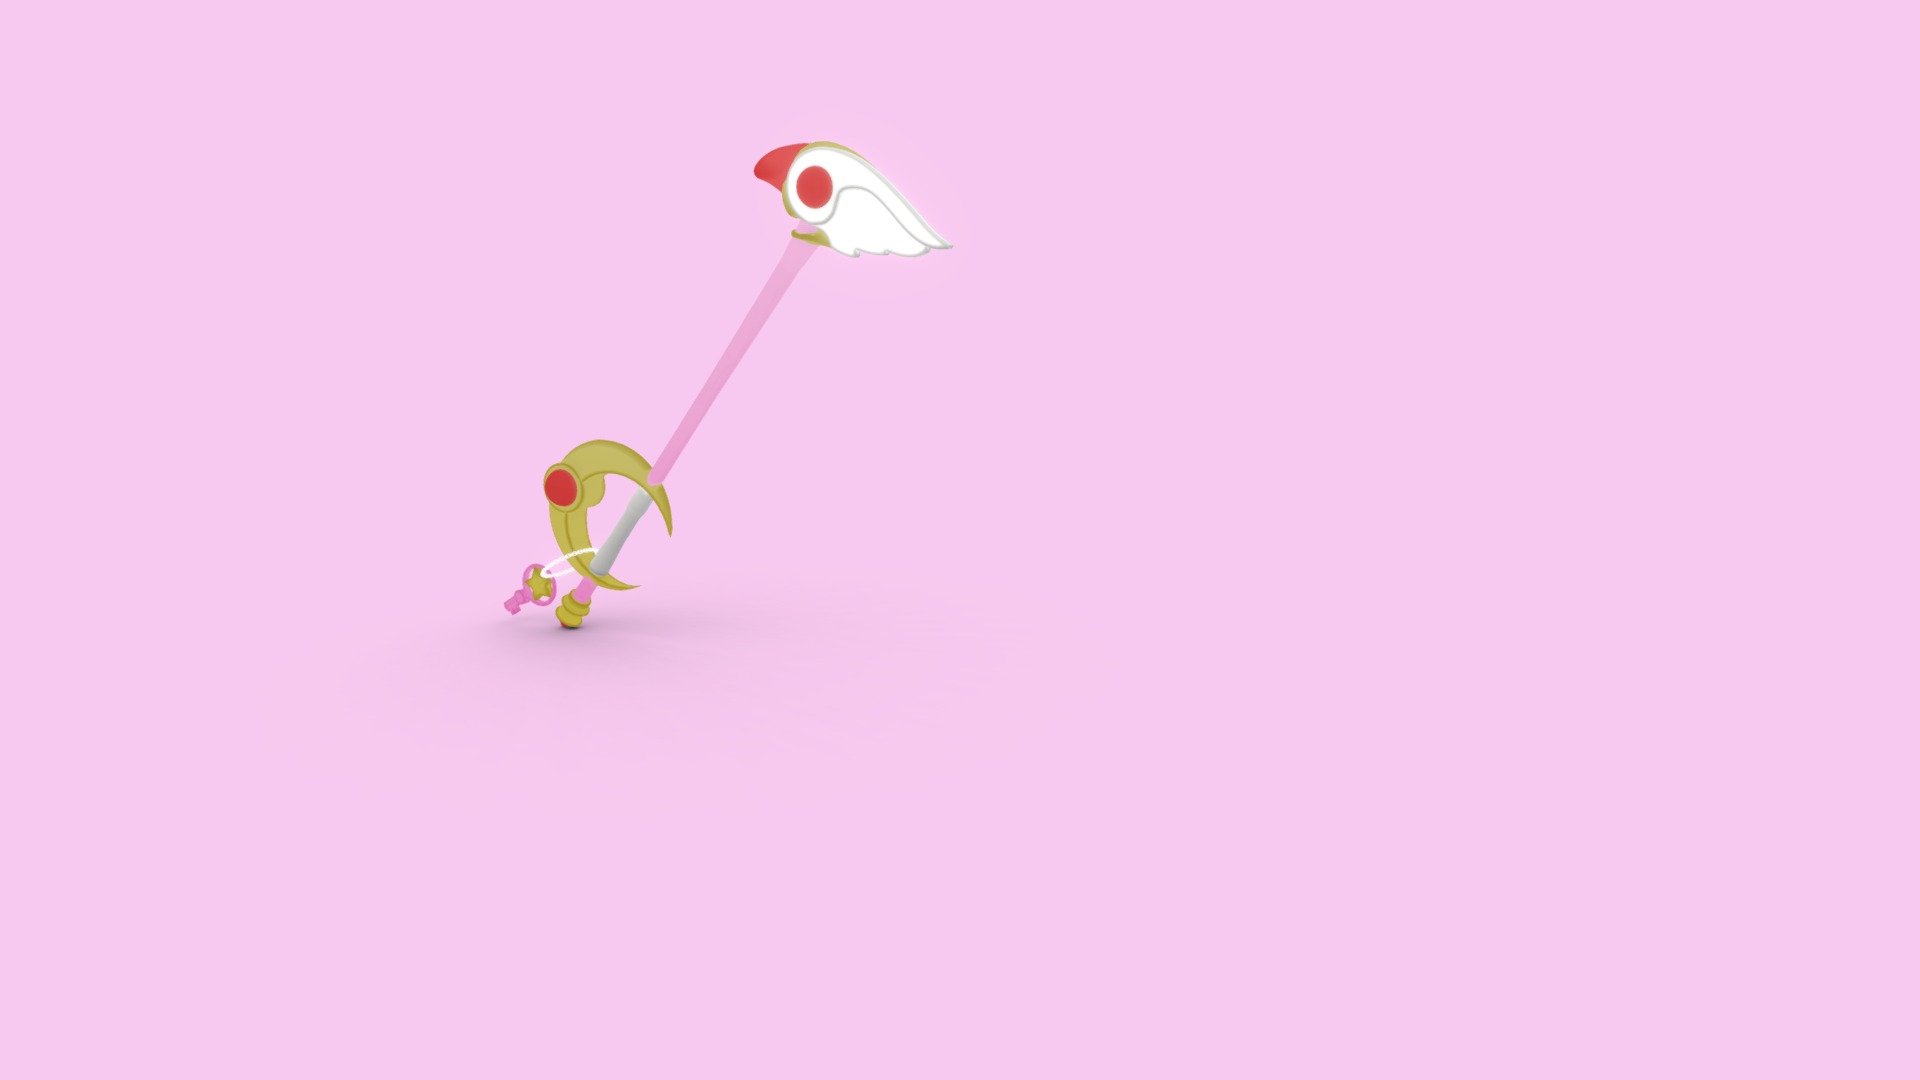 Sakura's Cardcaptor wand - Kingdom hearts theme!